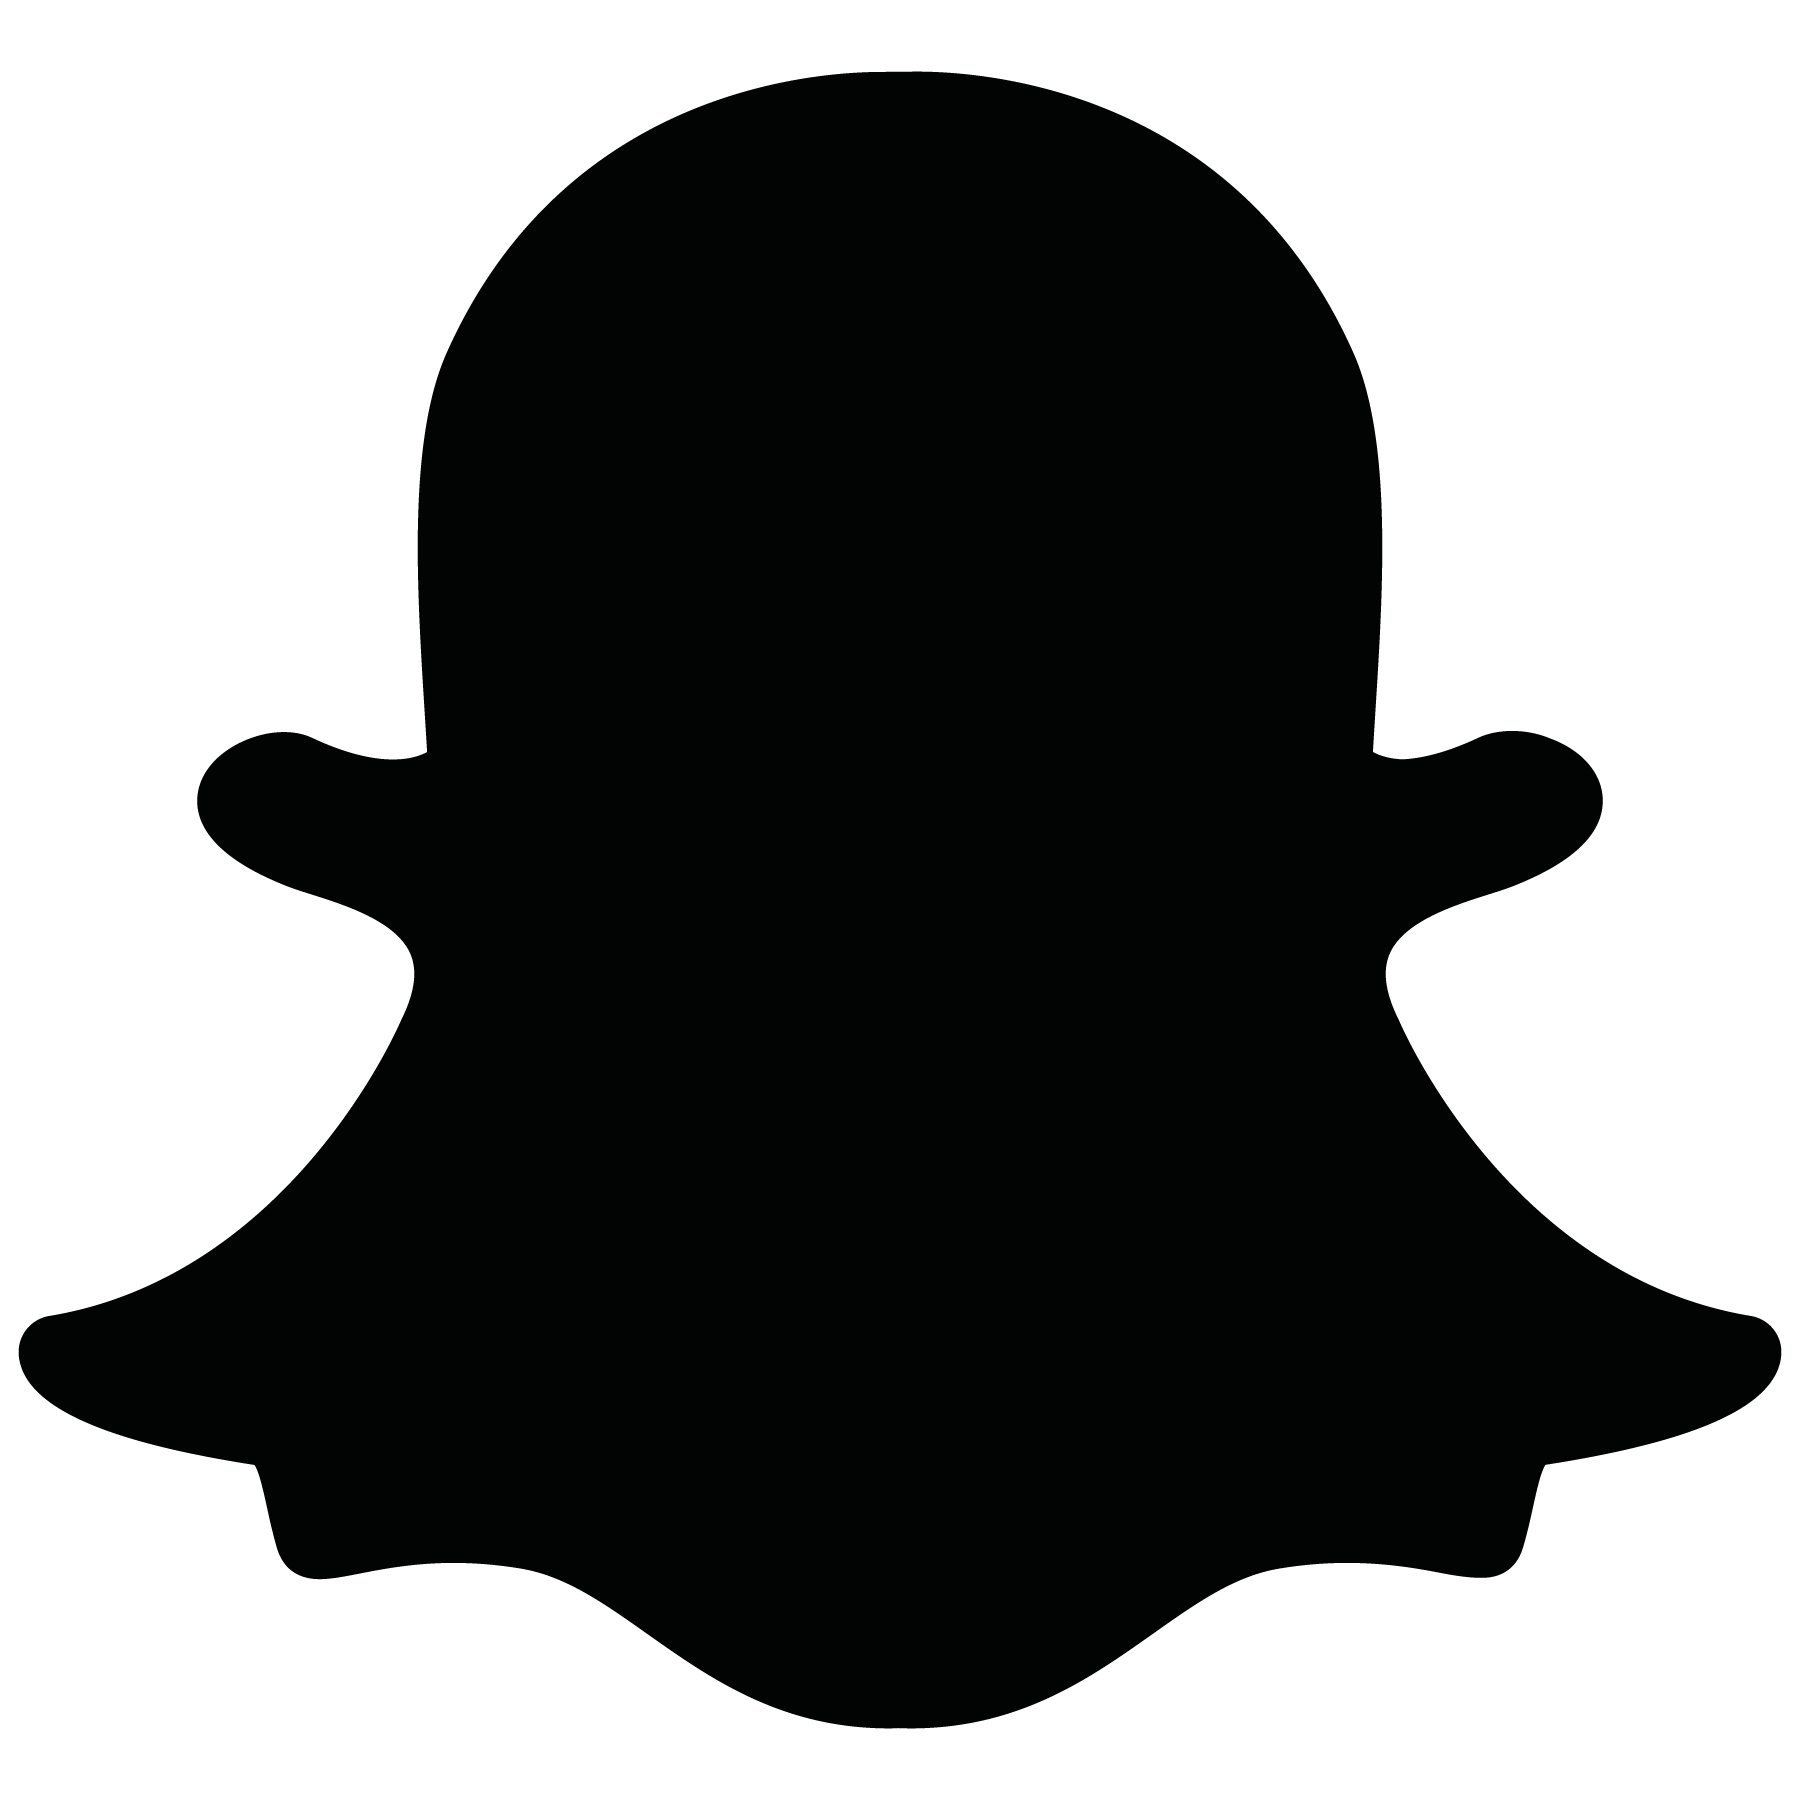 Snapchat Logo PNG Transparent Images Download - PNG Packs